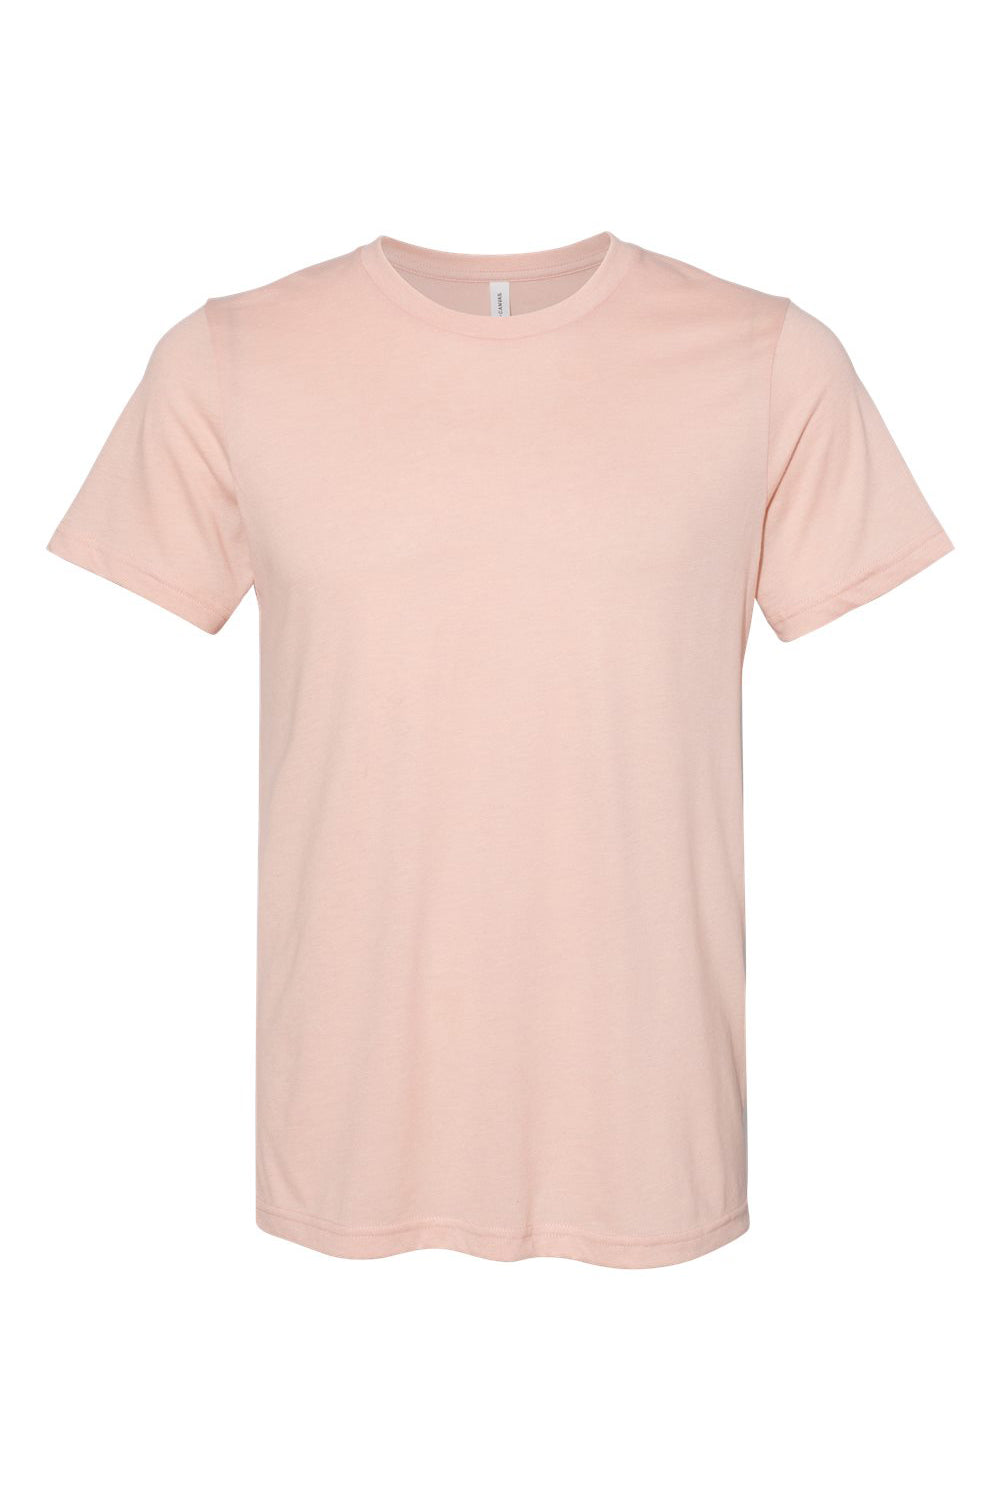 Bella + Canvas BC3301/3301C/3301 Mens Jersey Short Sleeve Crewneck T-Shirt Heather Peach Flat Front